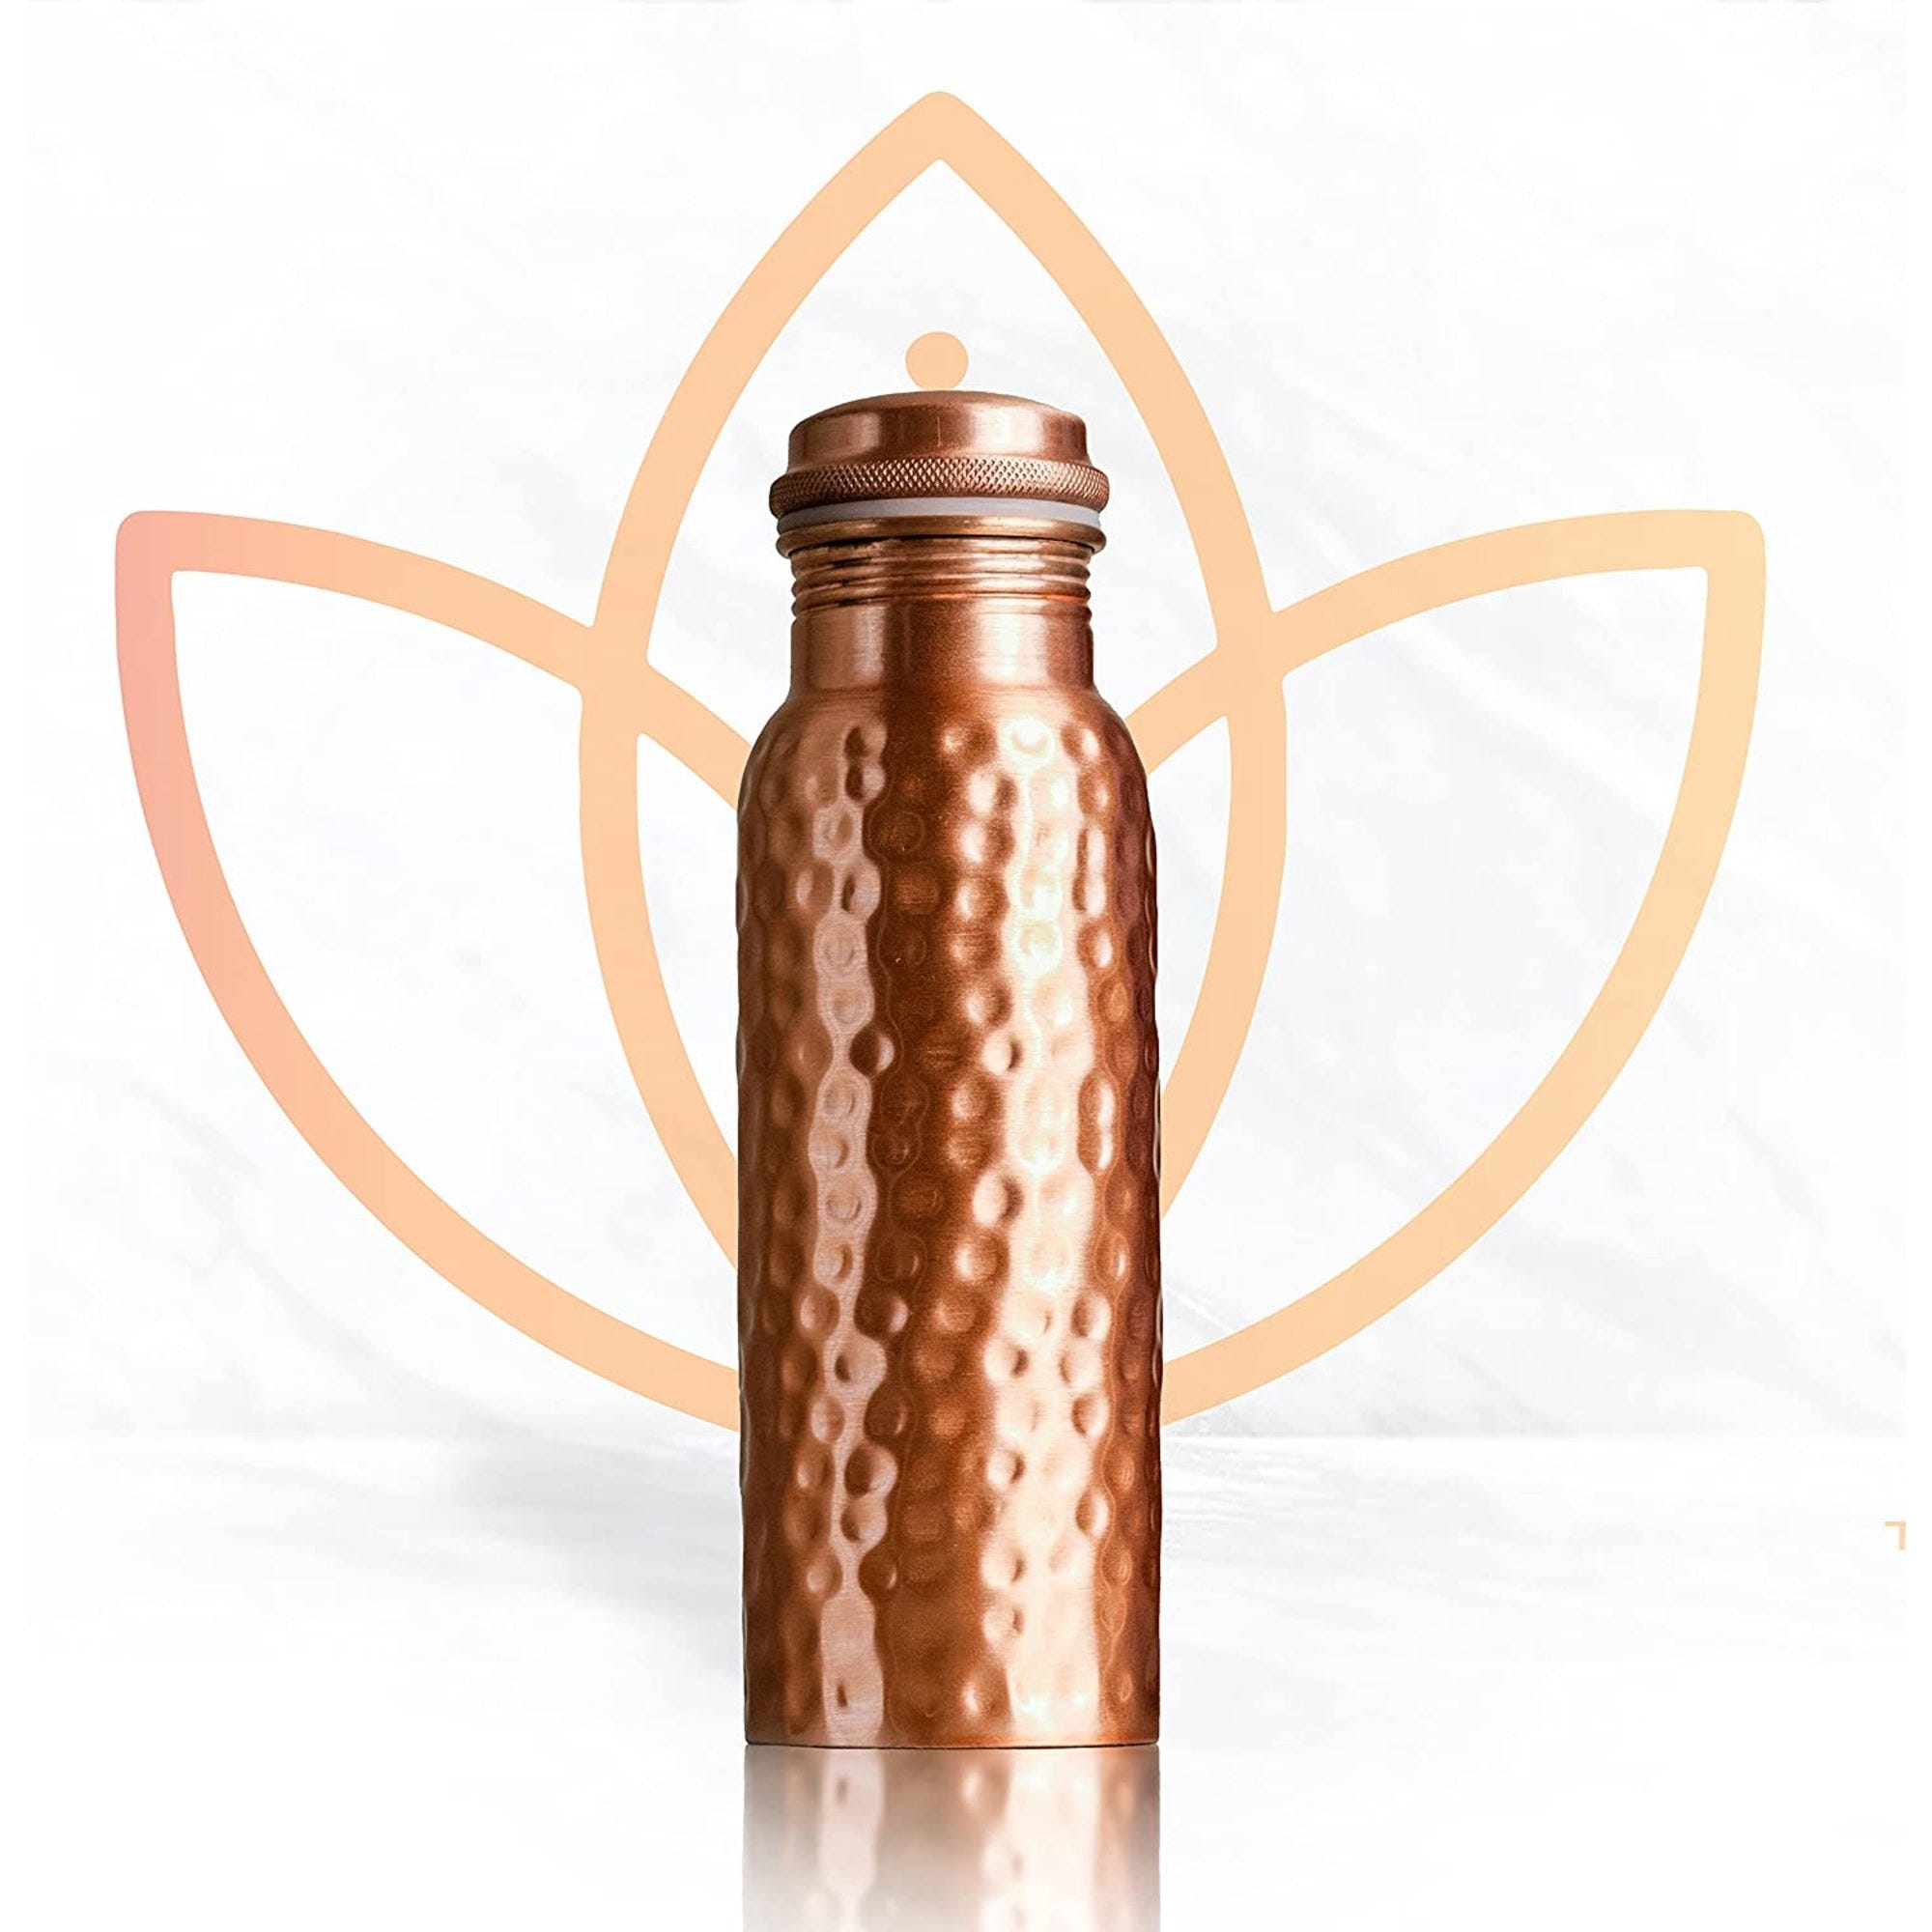 Ayurveda Healing Good For Health Hammered Copper Bottle Drink More Water Bottle 